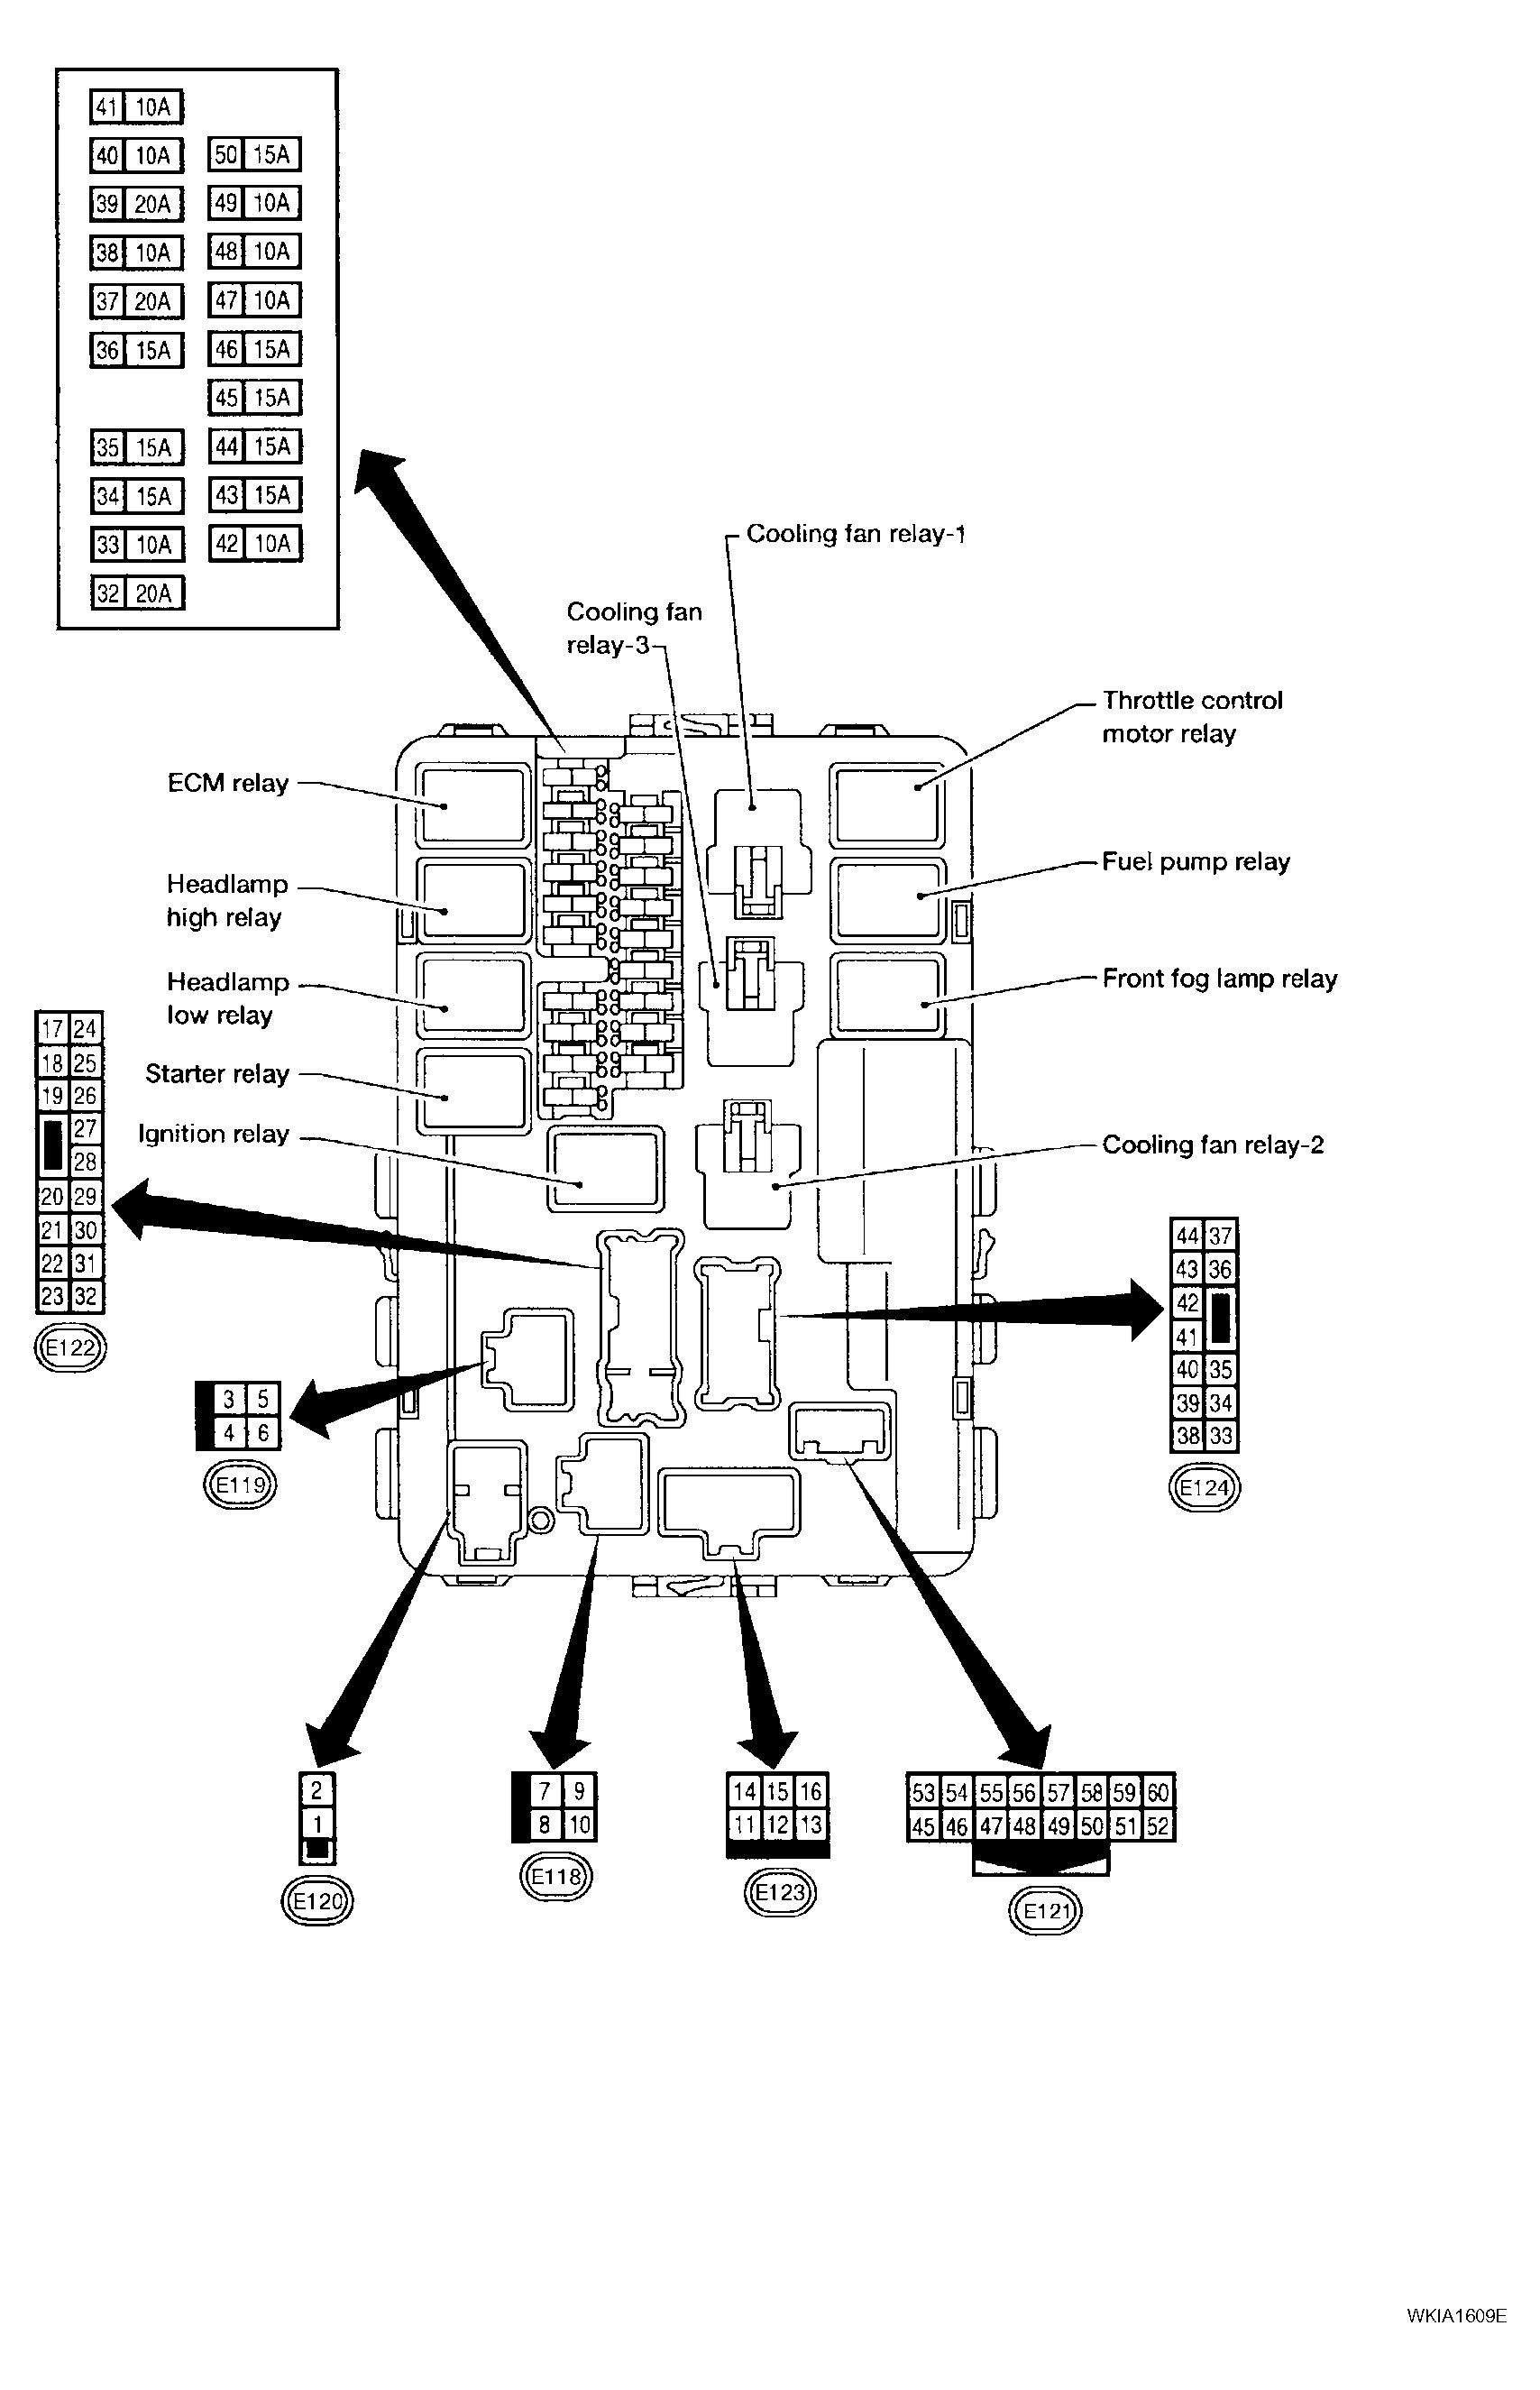 2001 Nissan Altima Engine Diagram 2005 Nissan Altima 2 5 Engine Diagram Wiring Diagram Paper Of 2001 Nissan Altima Engine Diagram